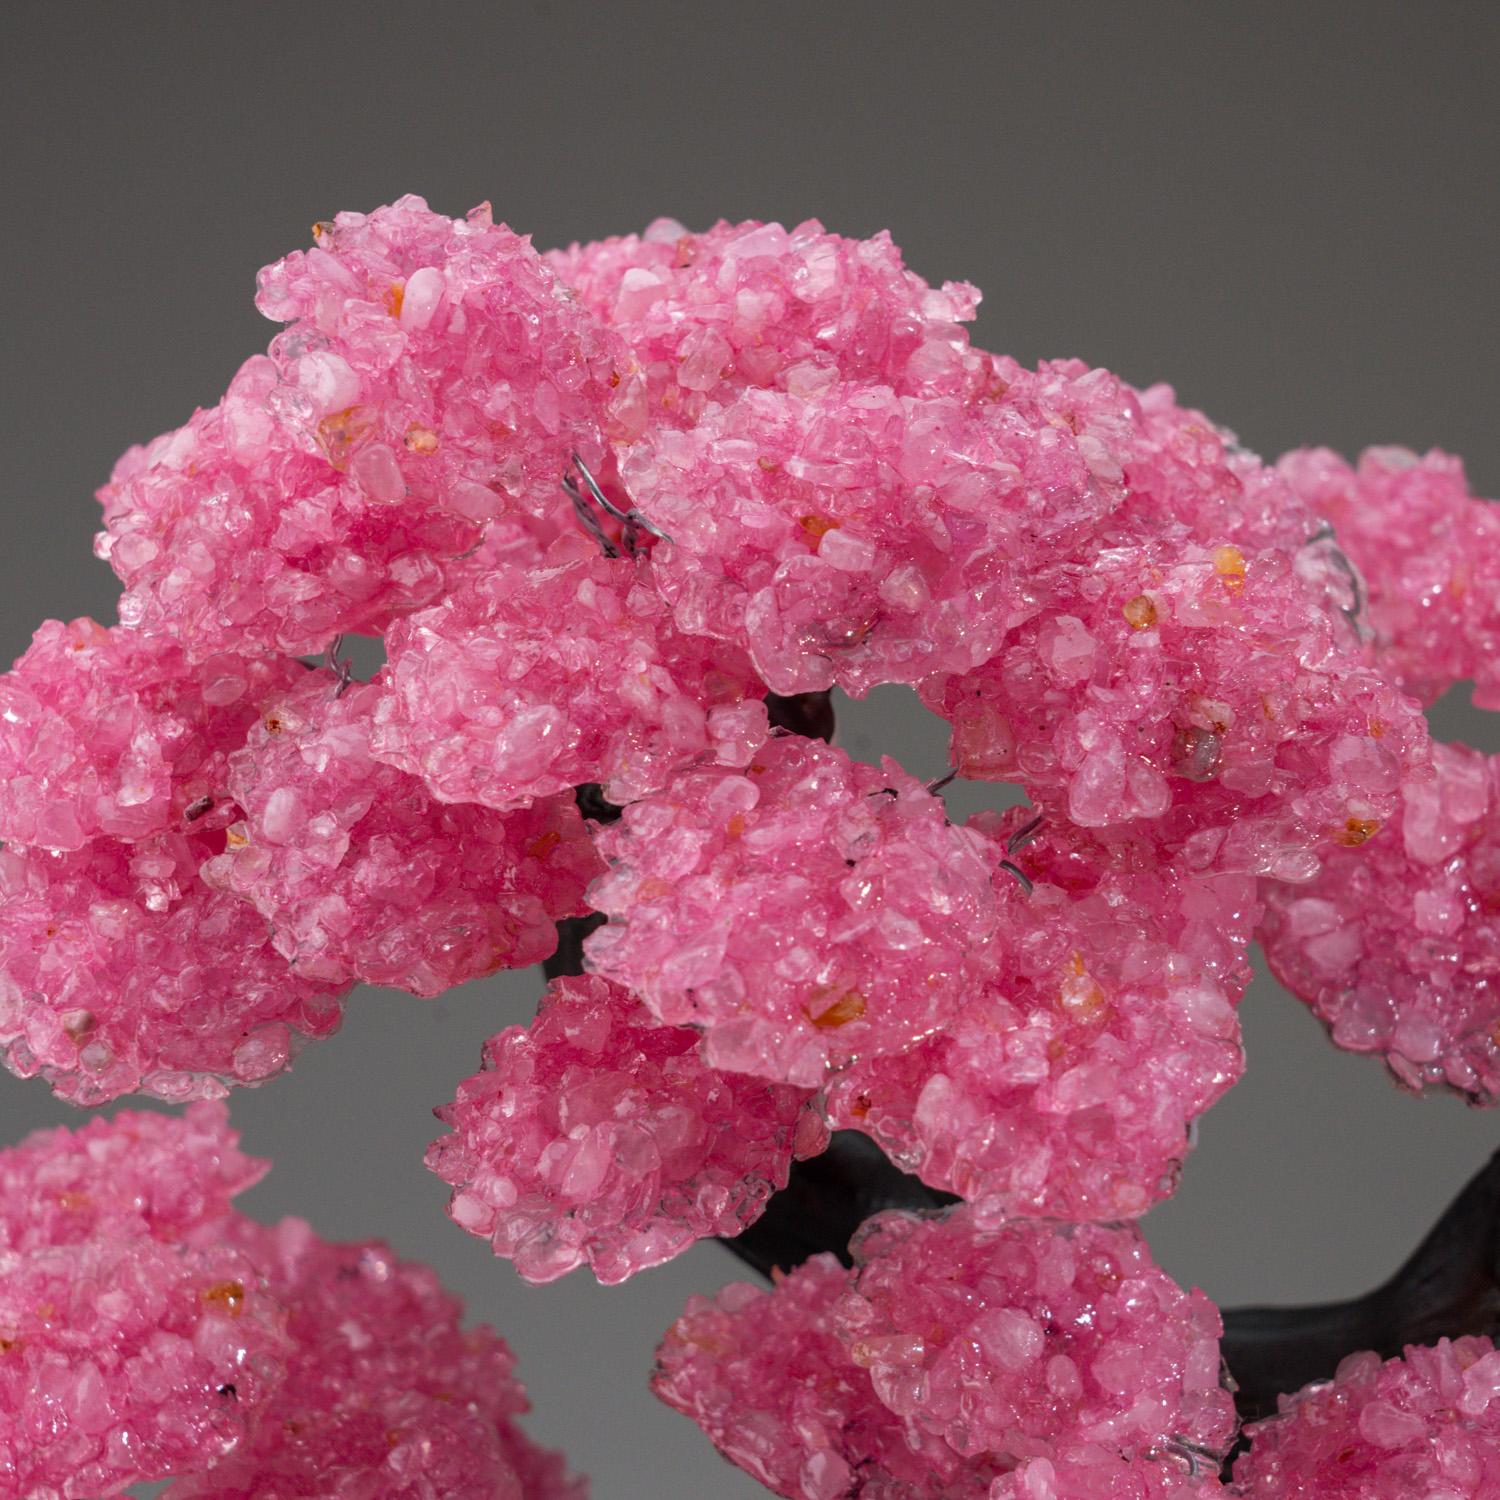 Uruguayan Custom Designed - Genuine Rose Quartz Clustered Gemstone Tree on Amethyst Matrix